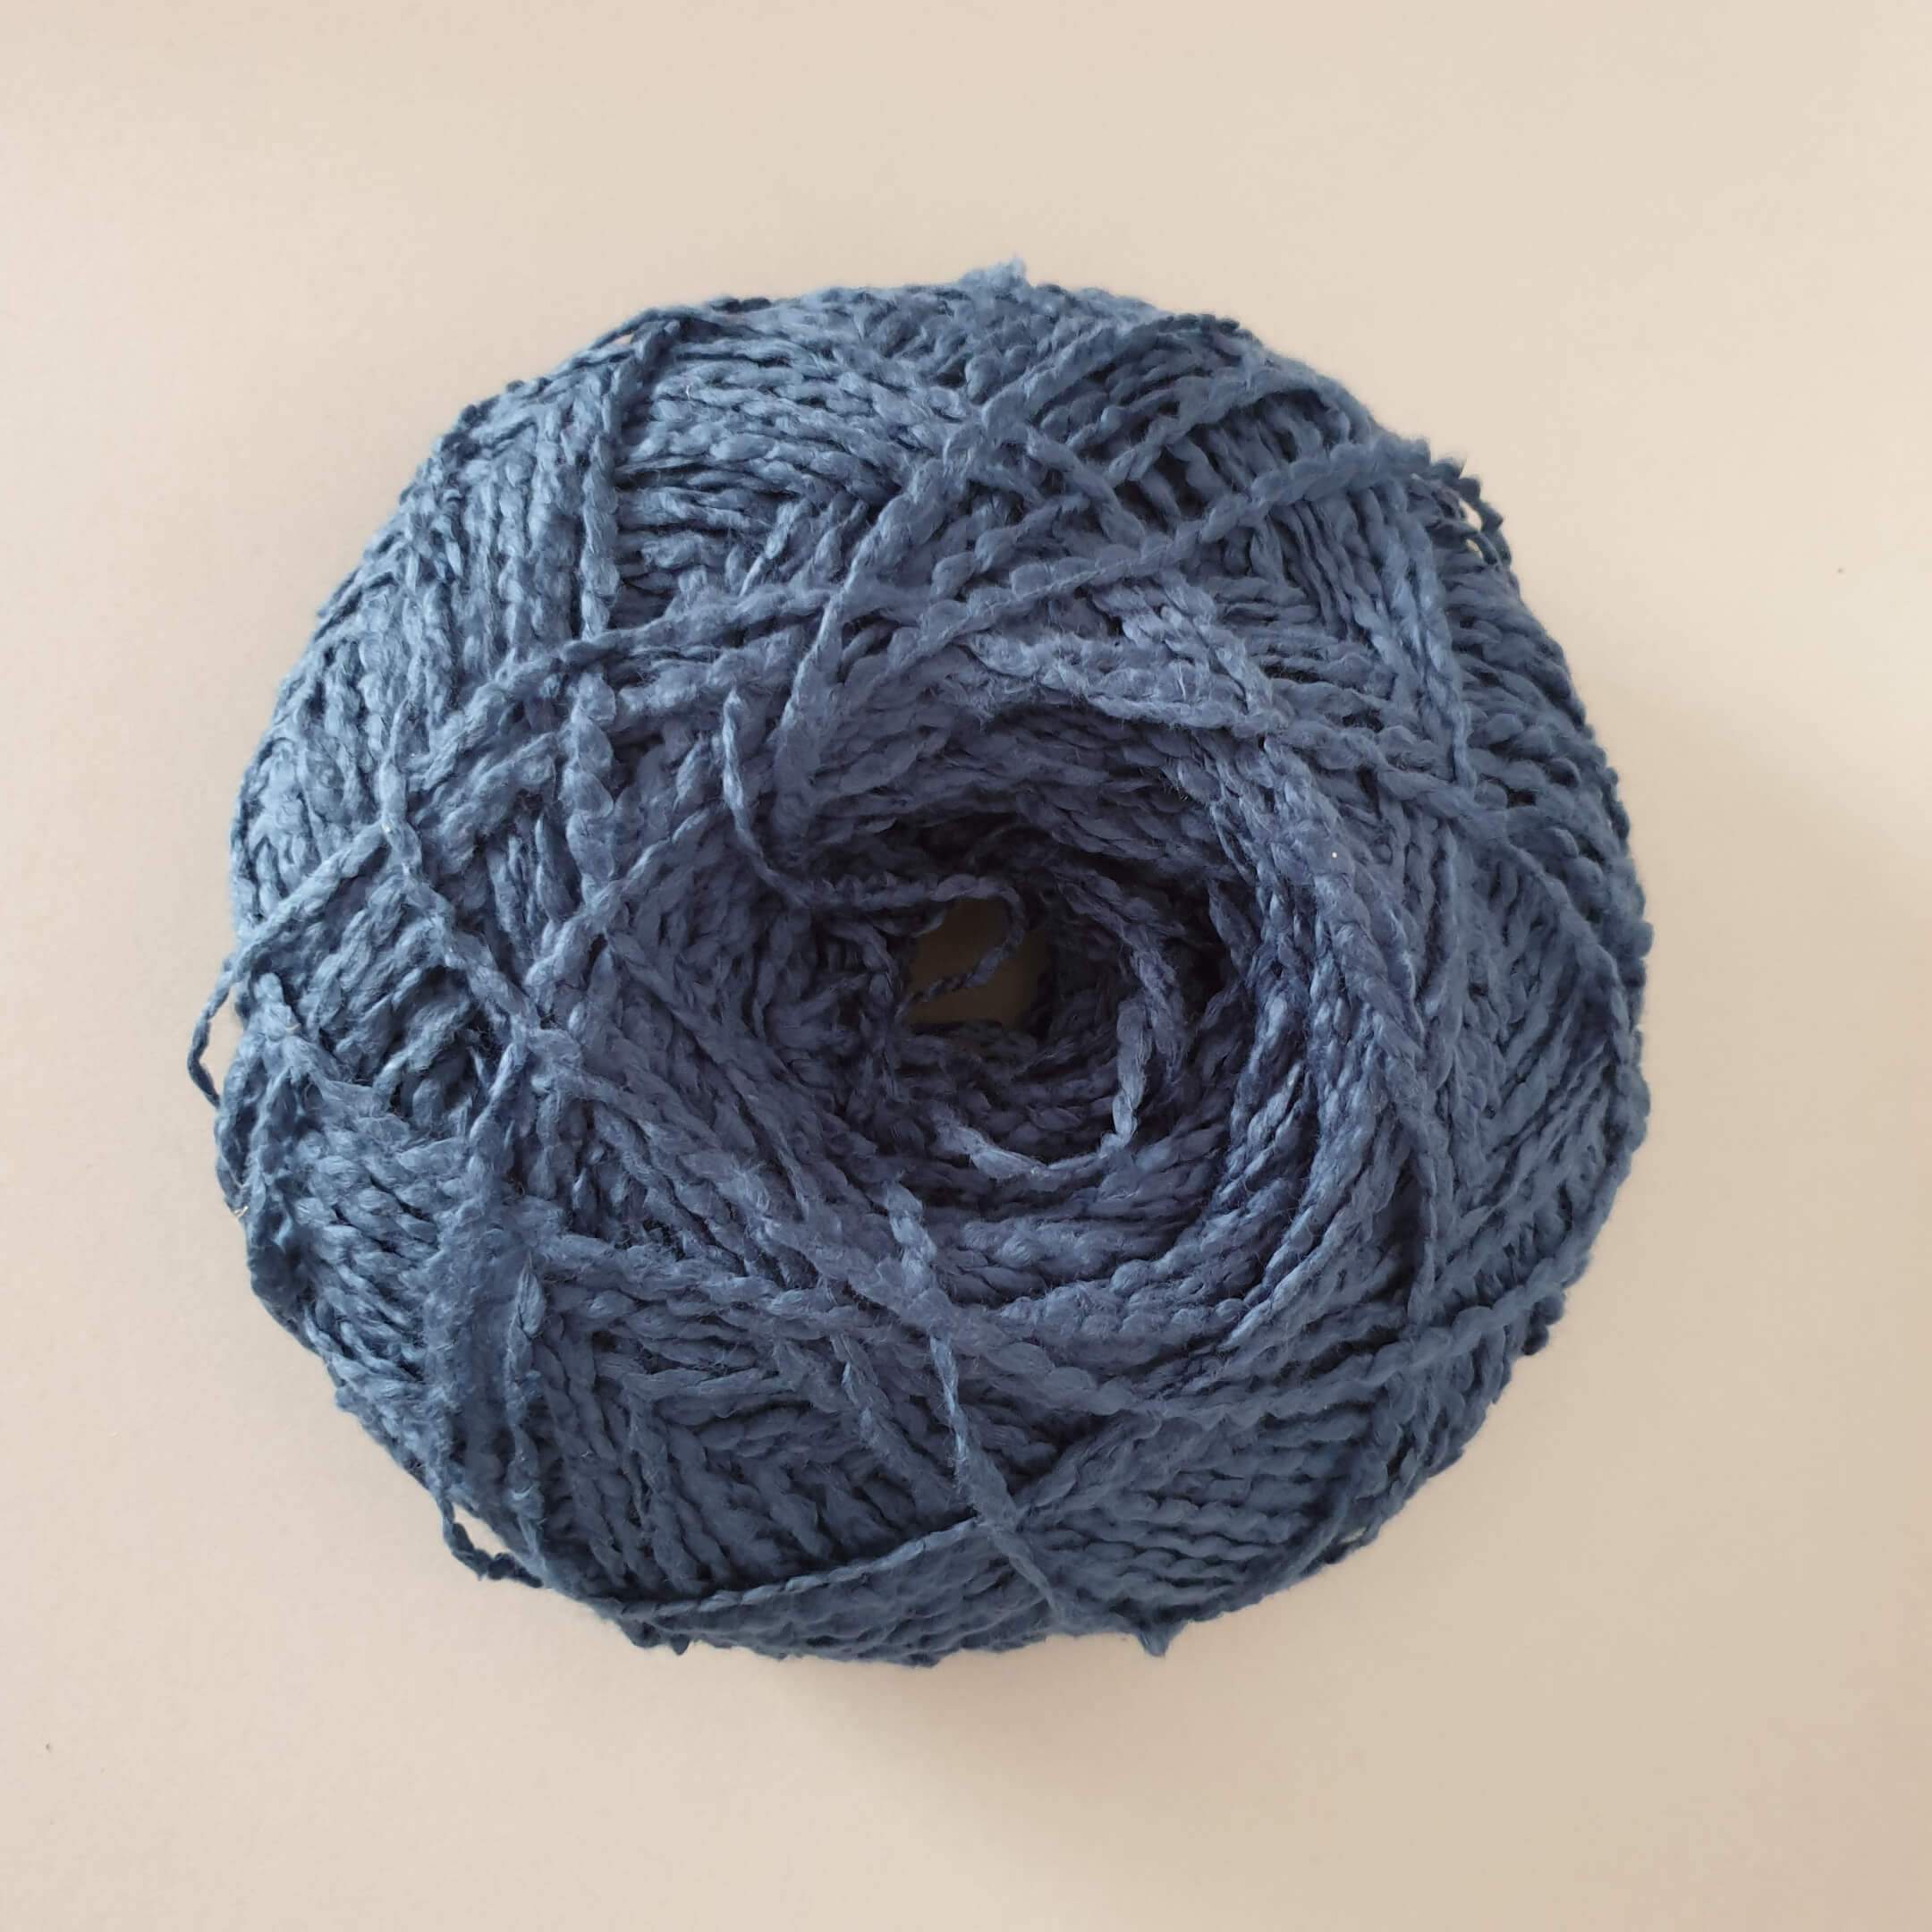 Cotton Candy Wolle - Jeans Blau - Indigo - 100gr - Effektwolle -CotCandyJeansblau - Gokrea.com